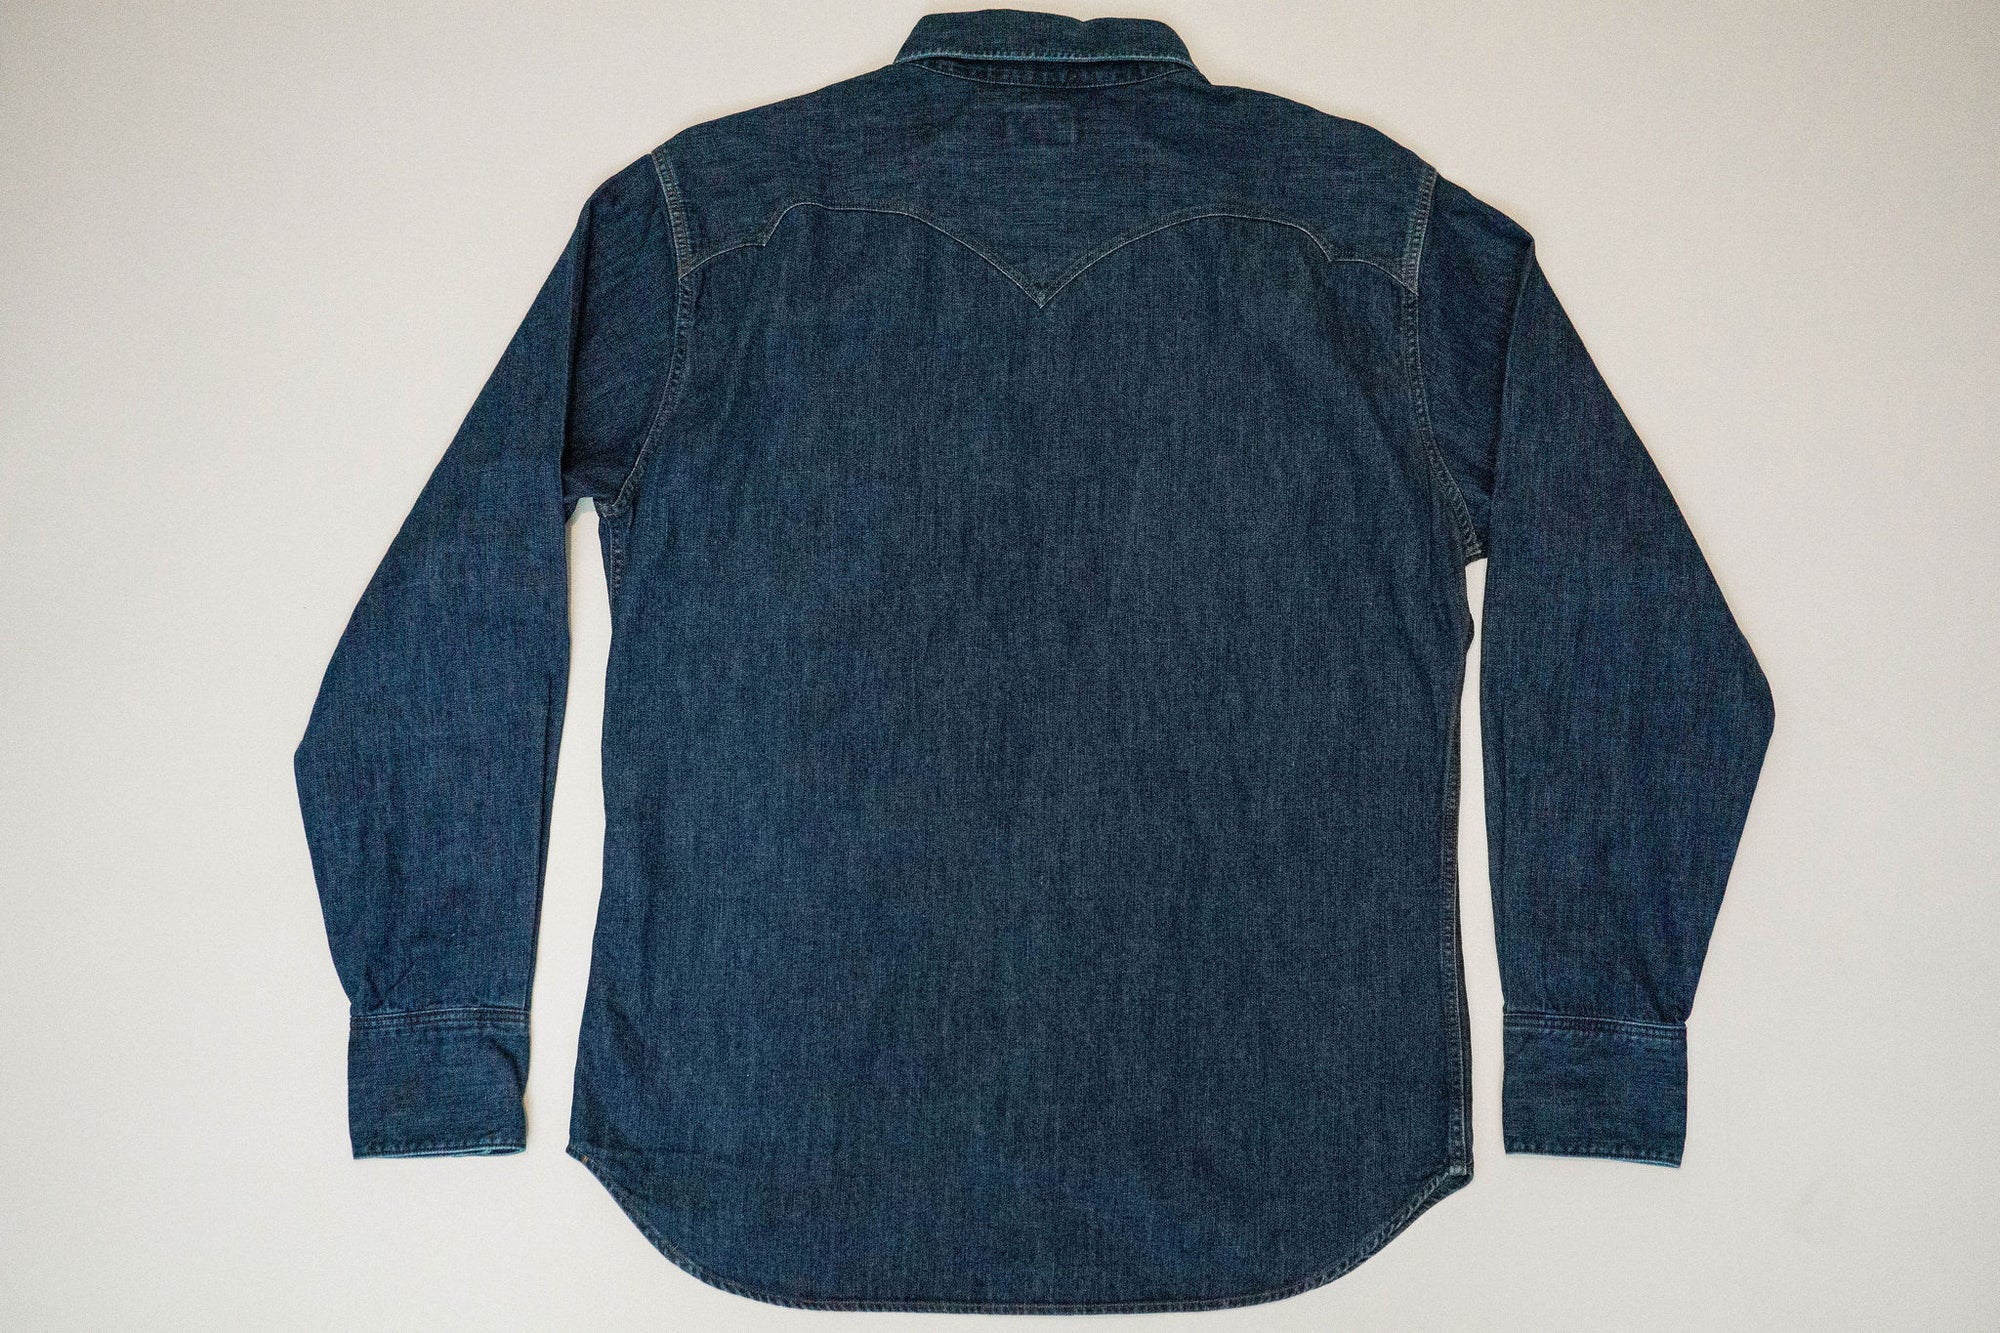 Stevenson Overall Co. Cody Shirt - Faded Indigo